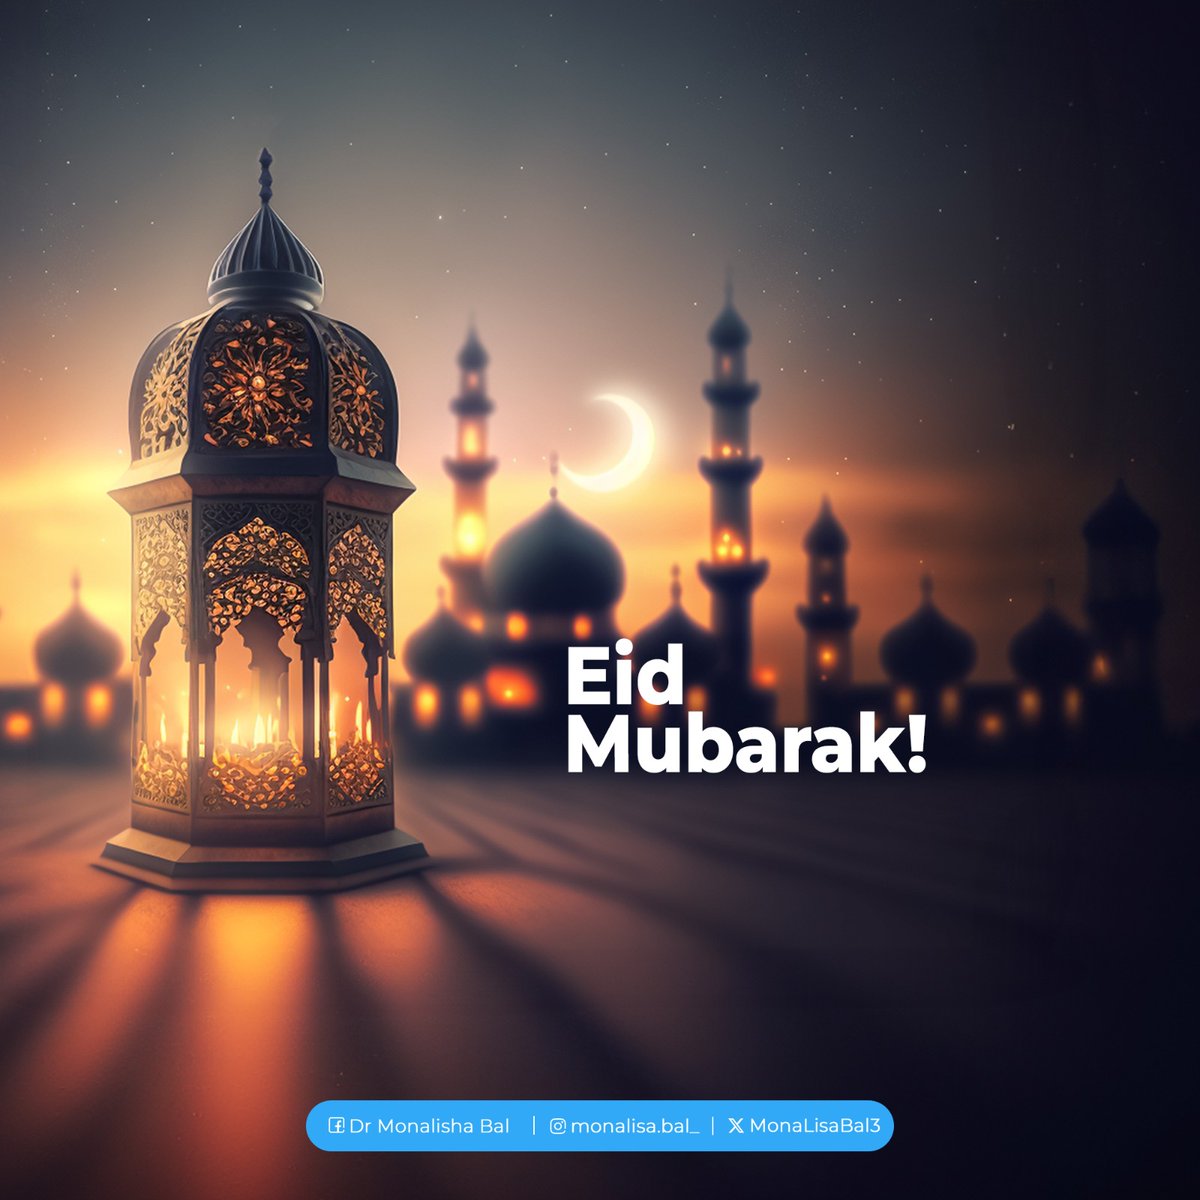 May this Eid bring you and your loved ones abundant blessings, happiness, and success. Eid Mubarak!

#Eid #KiiTIS #EidMubarak